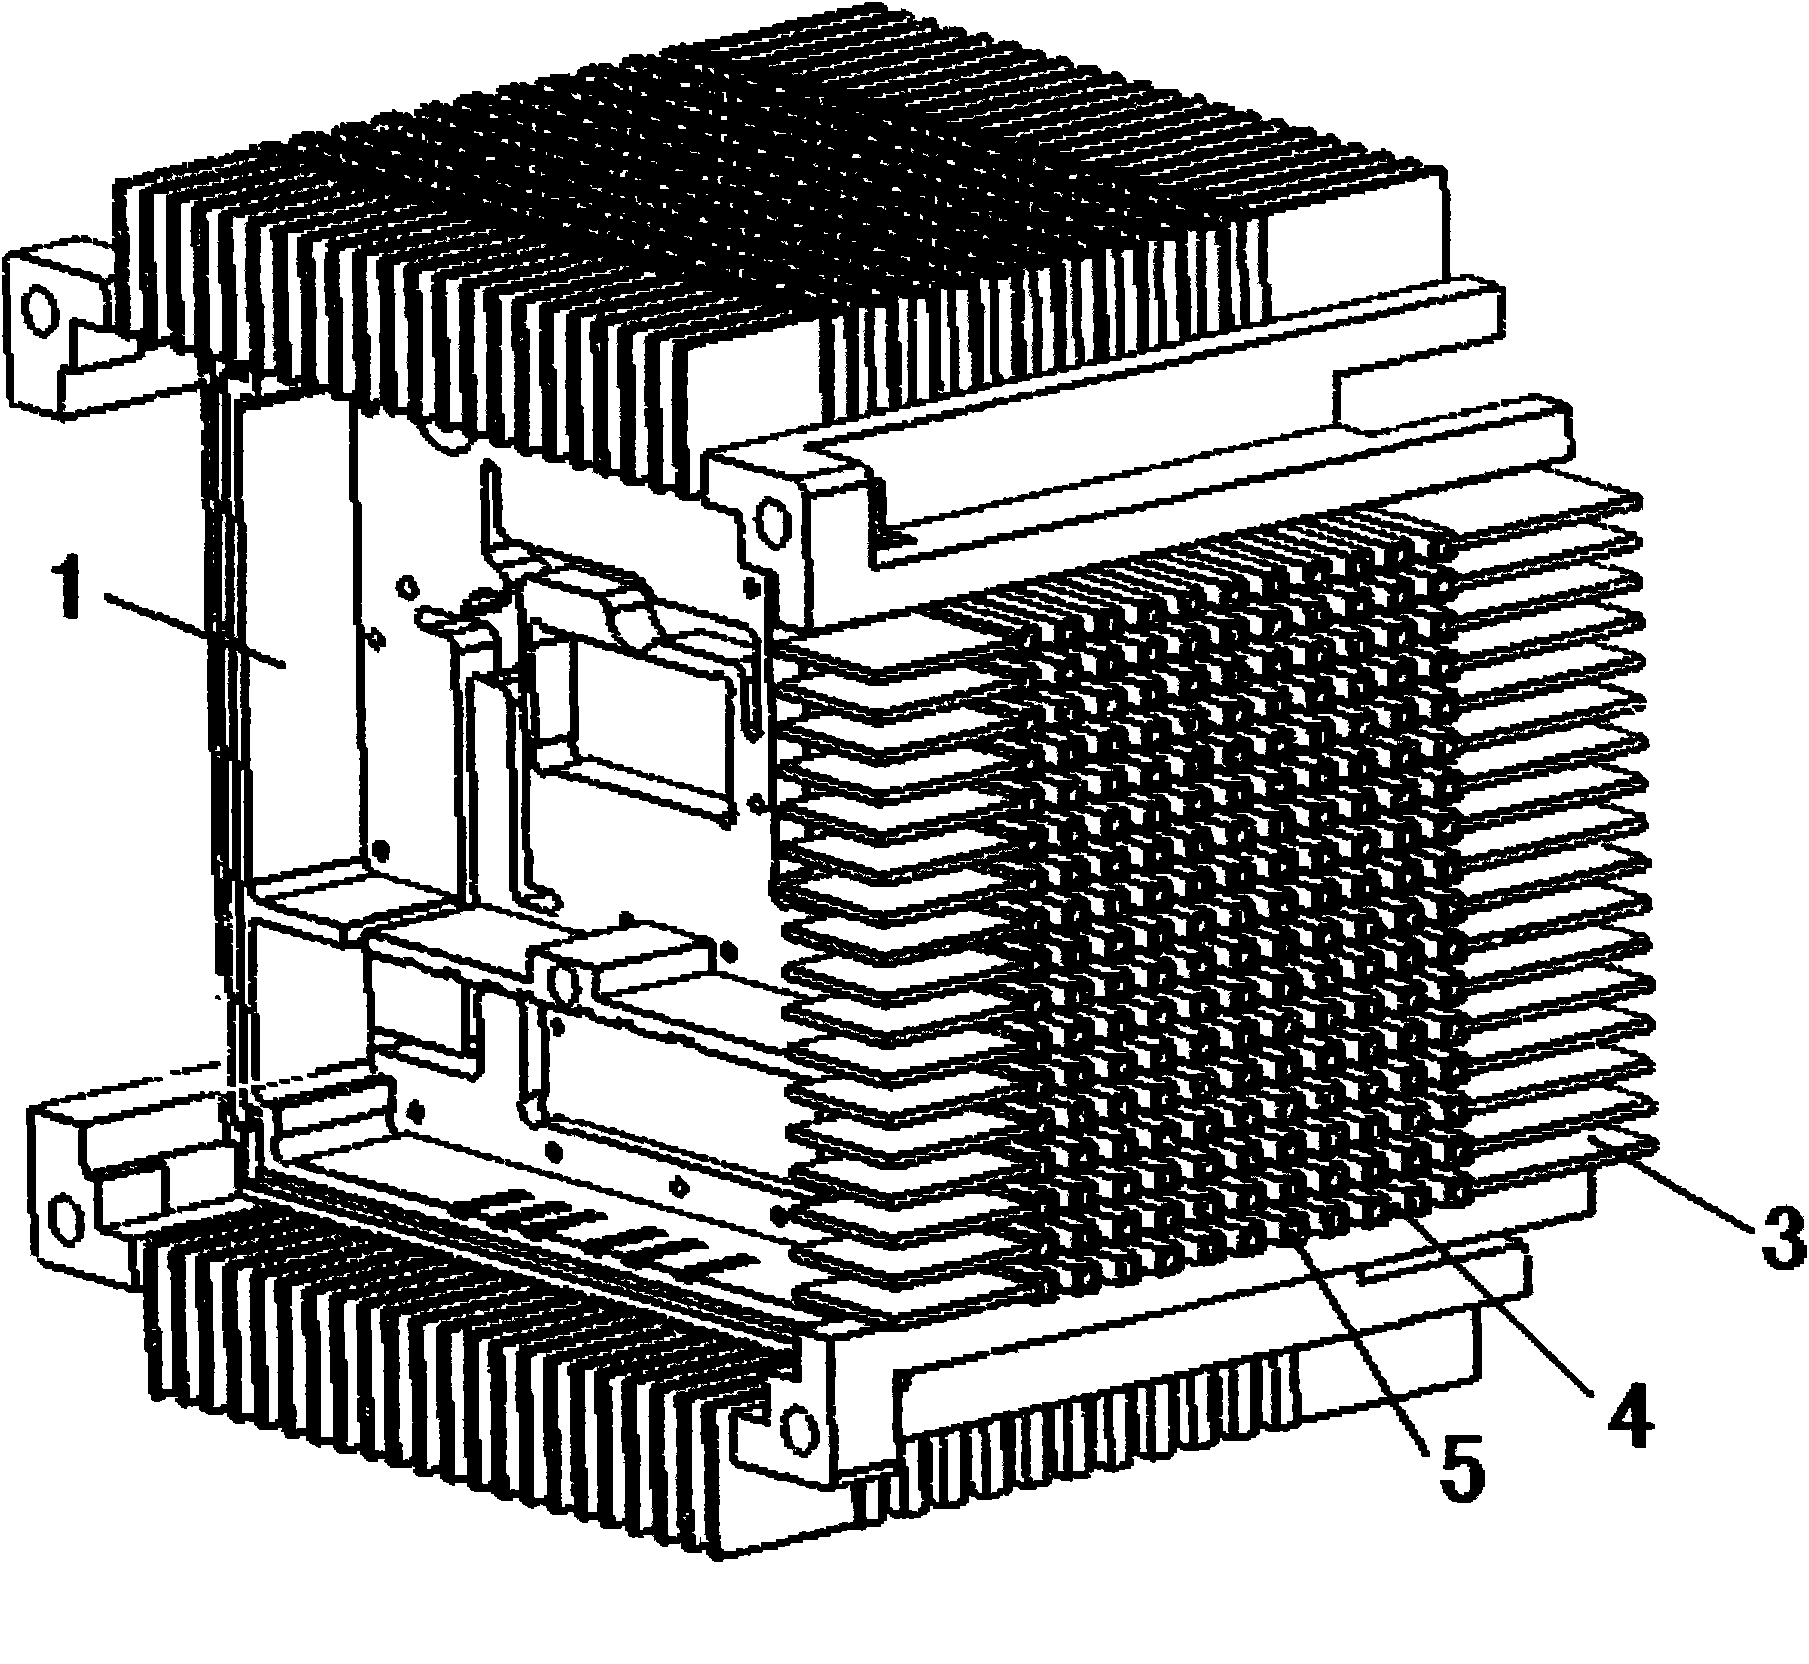 Method for manufacturing radiator and radiator